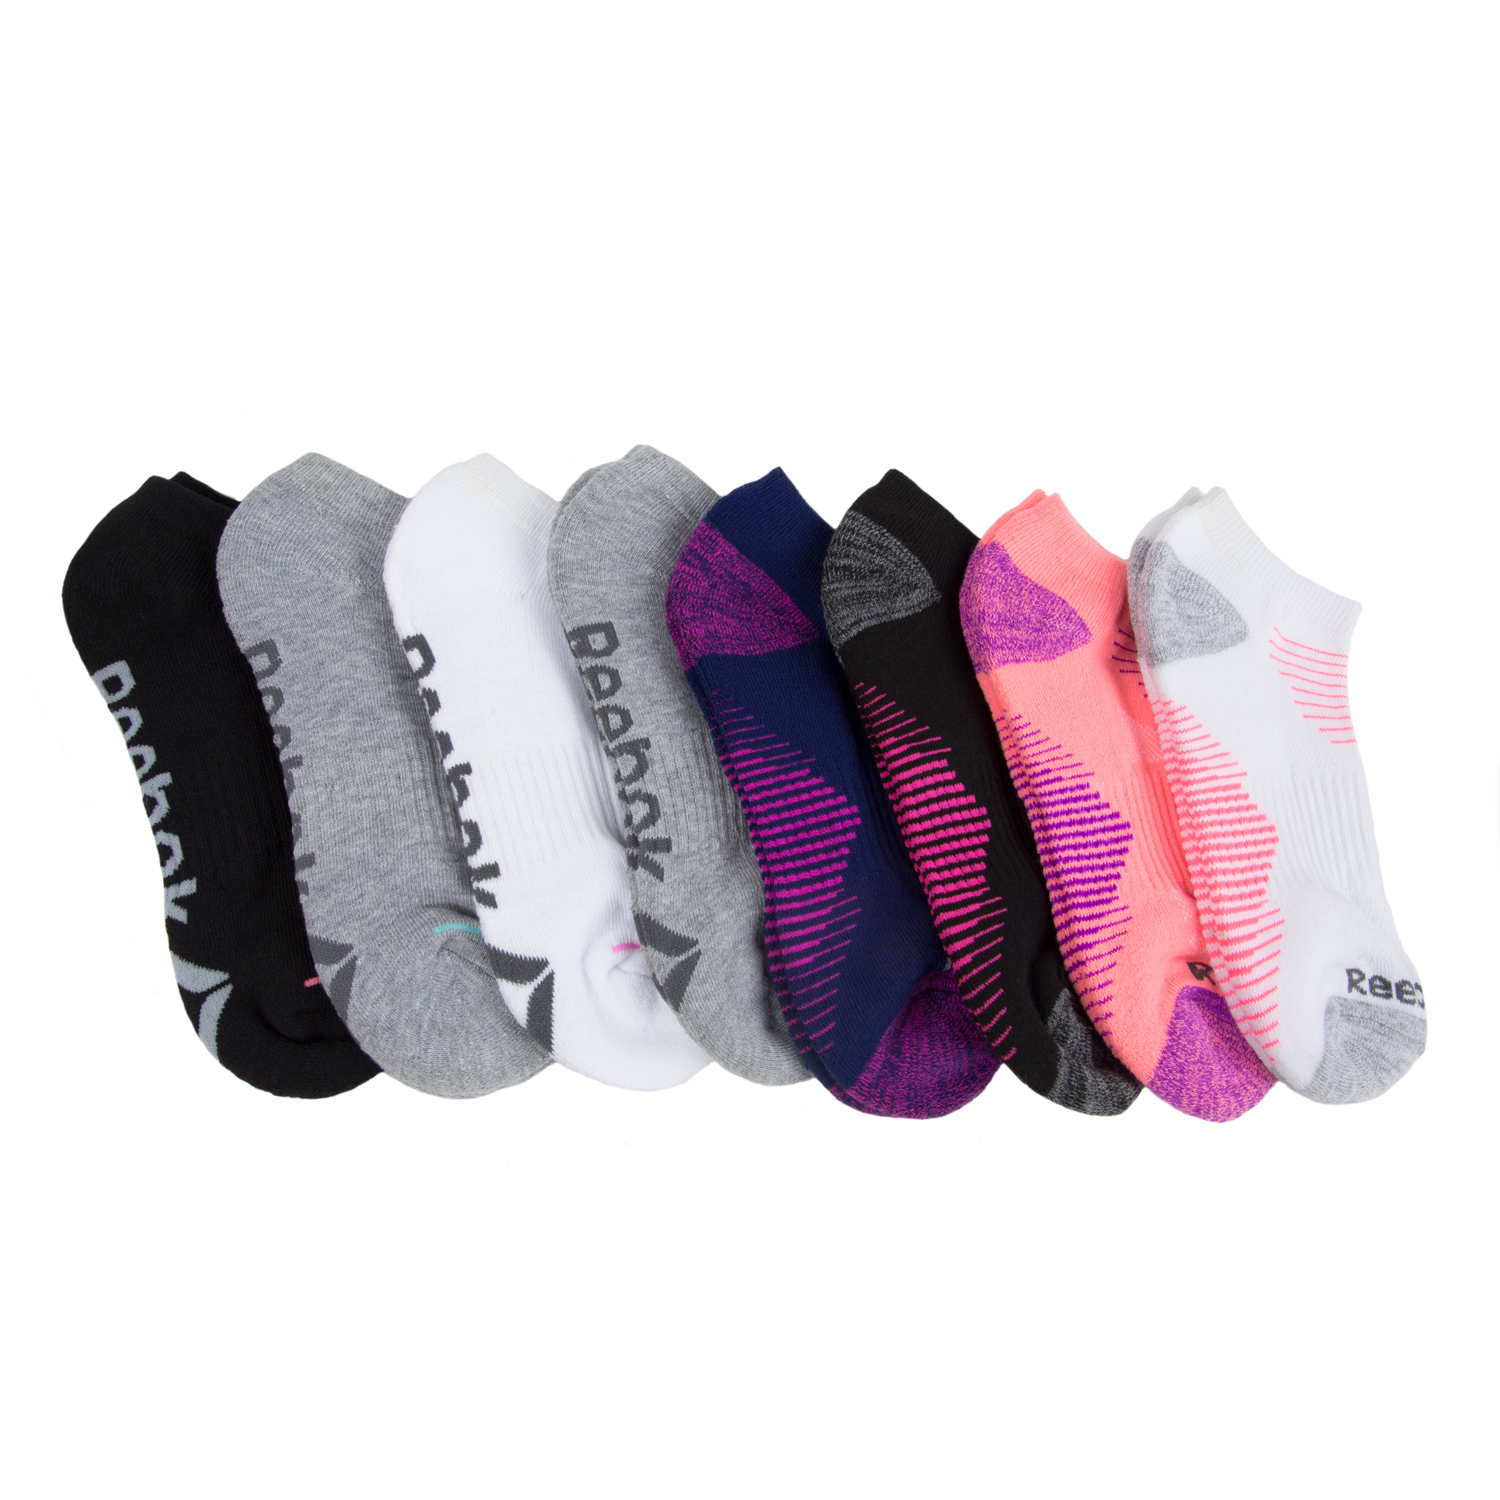 4 or 8 pack Women's Reebok Performance Training Low Cut Socks Bright MultiColor 